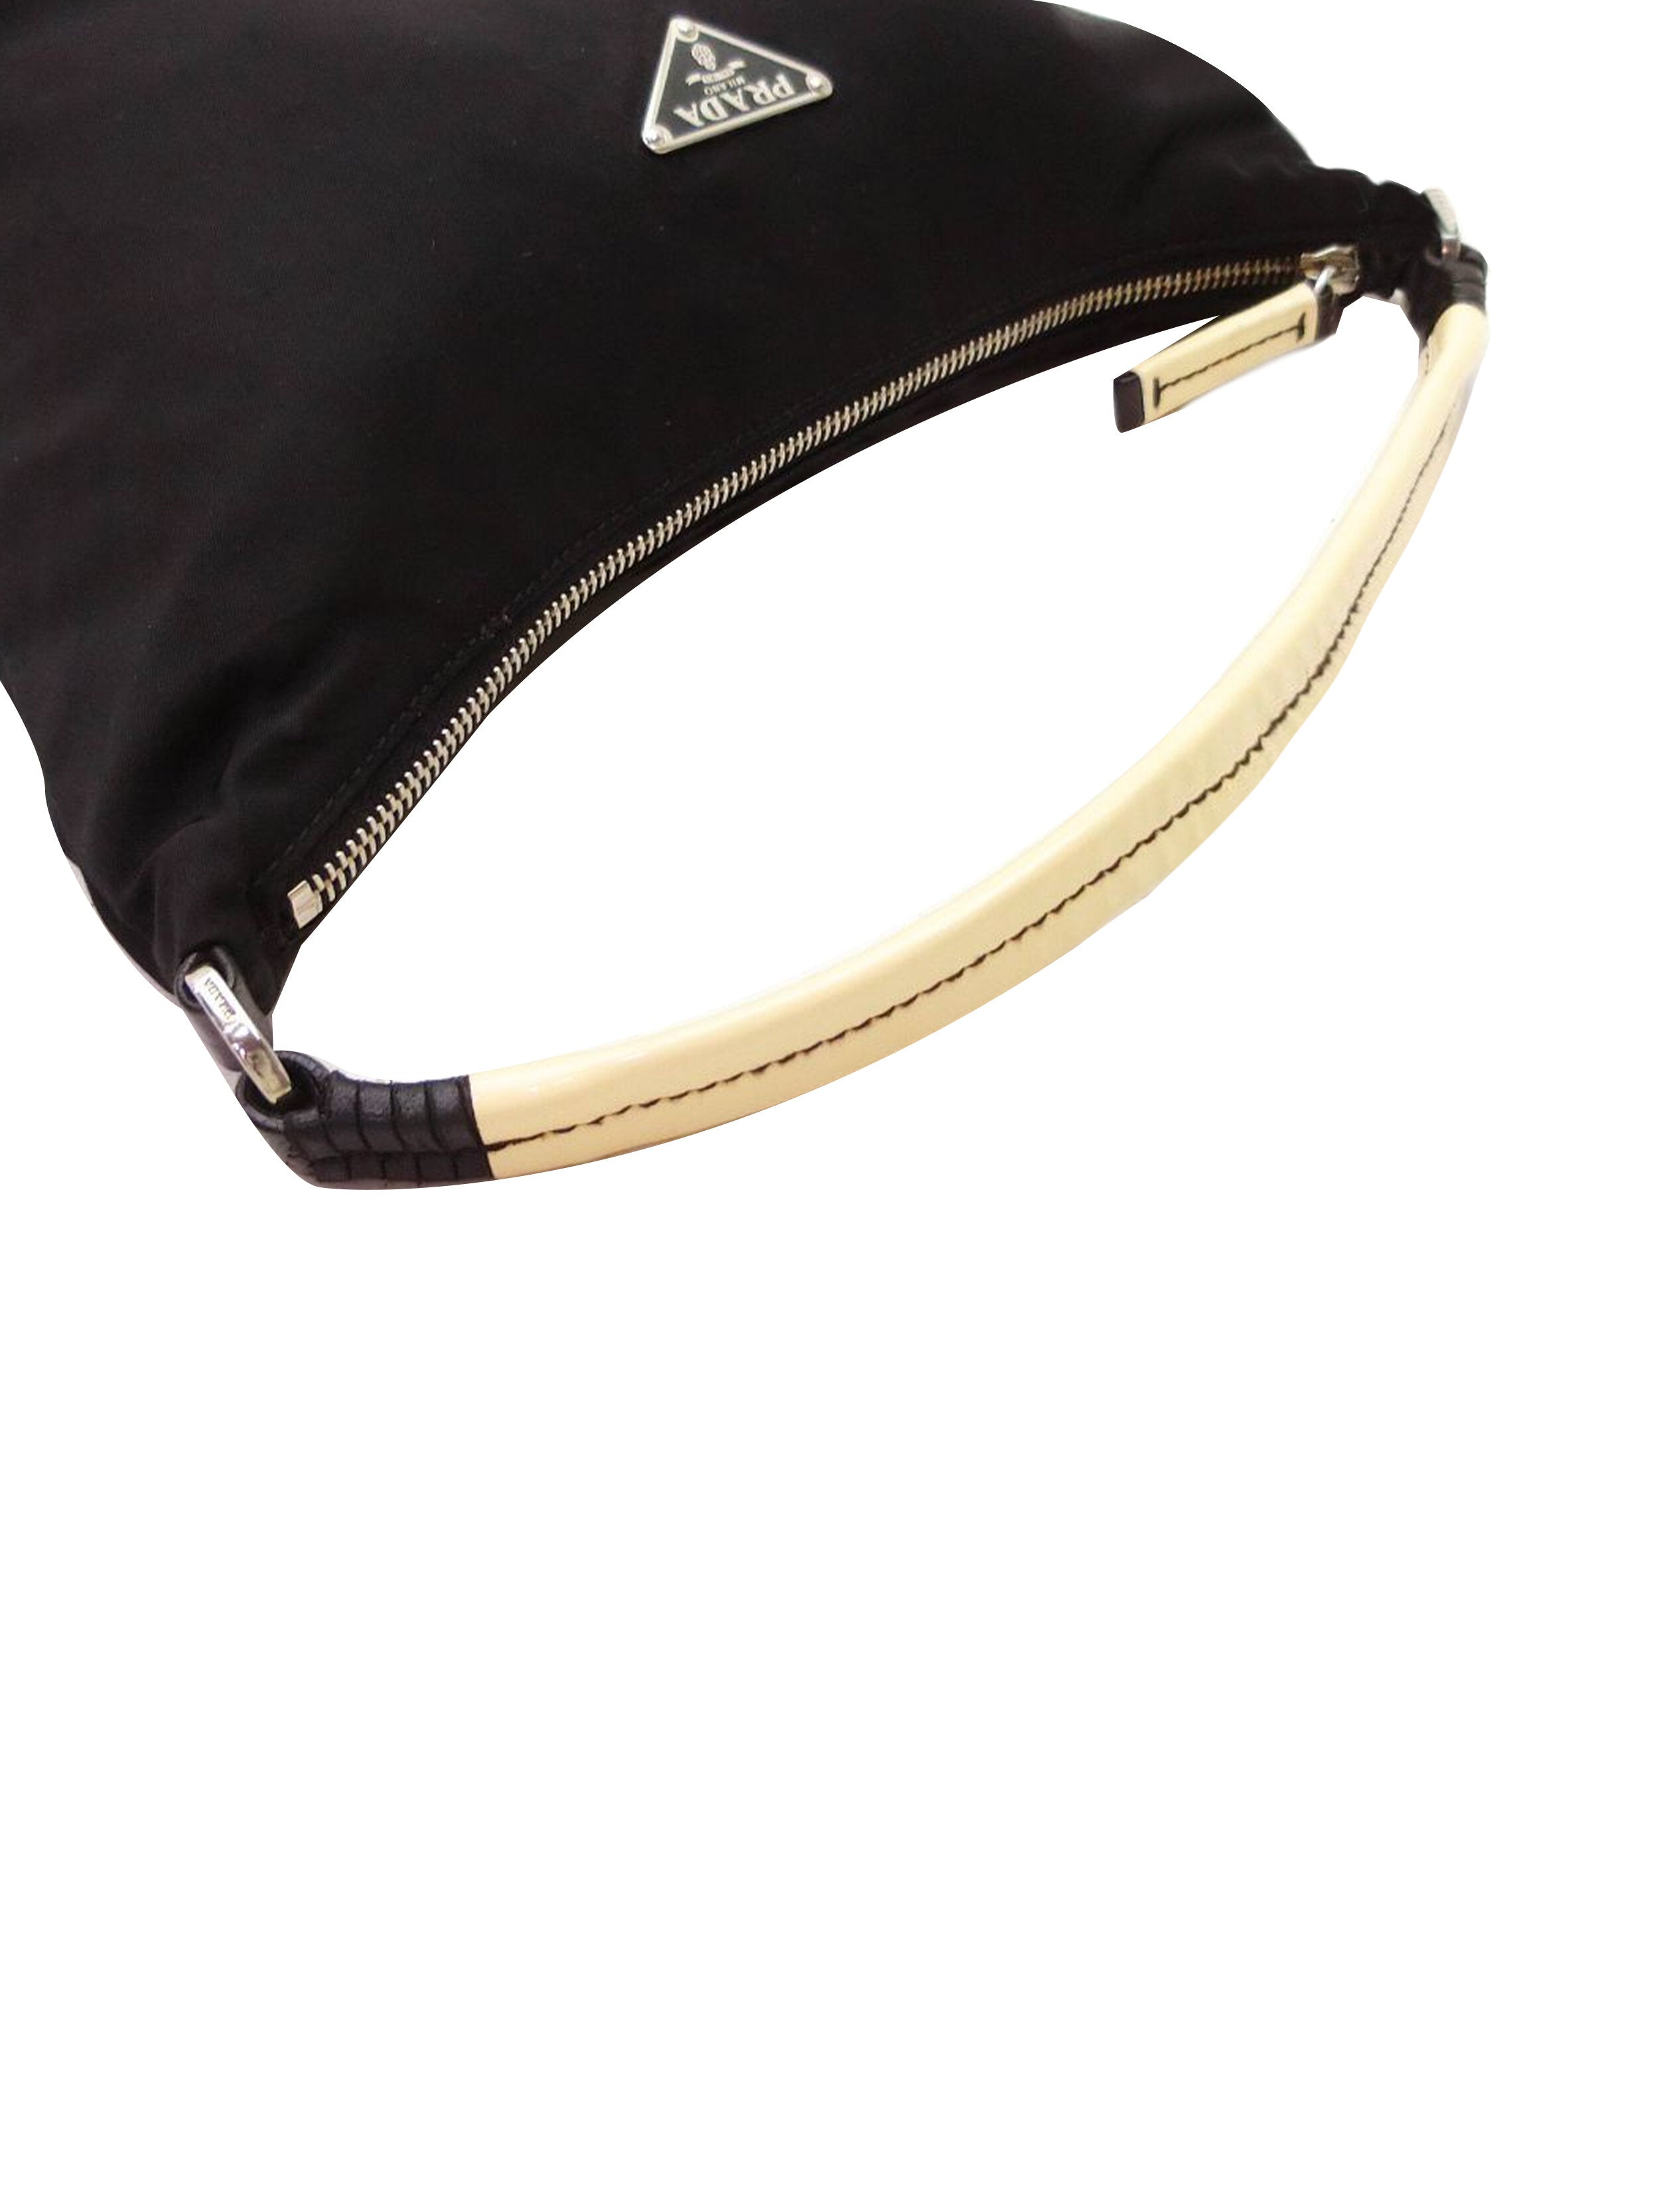 Prada 2000s Black Small Nylon Shoulder Bag · INTO